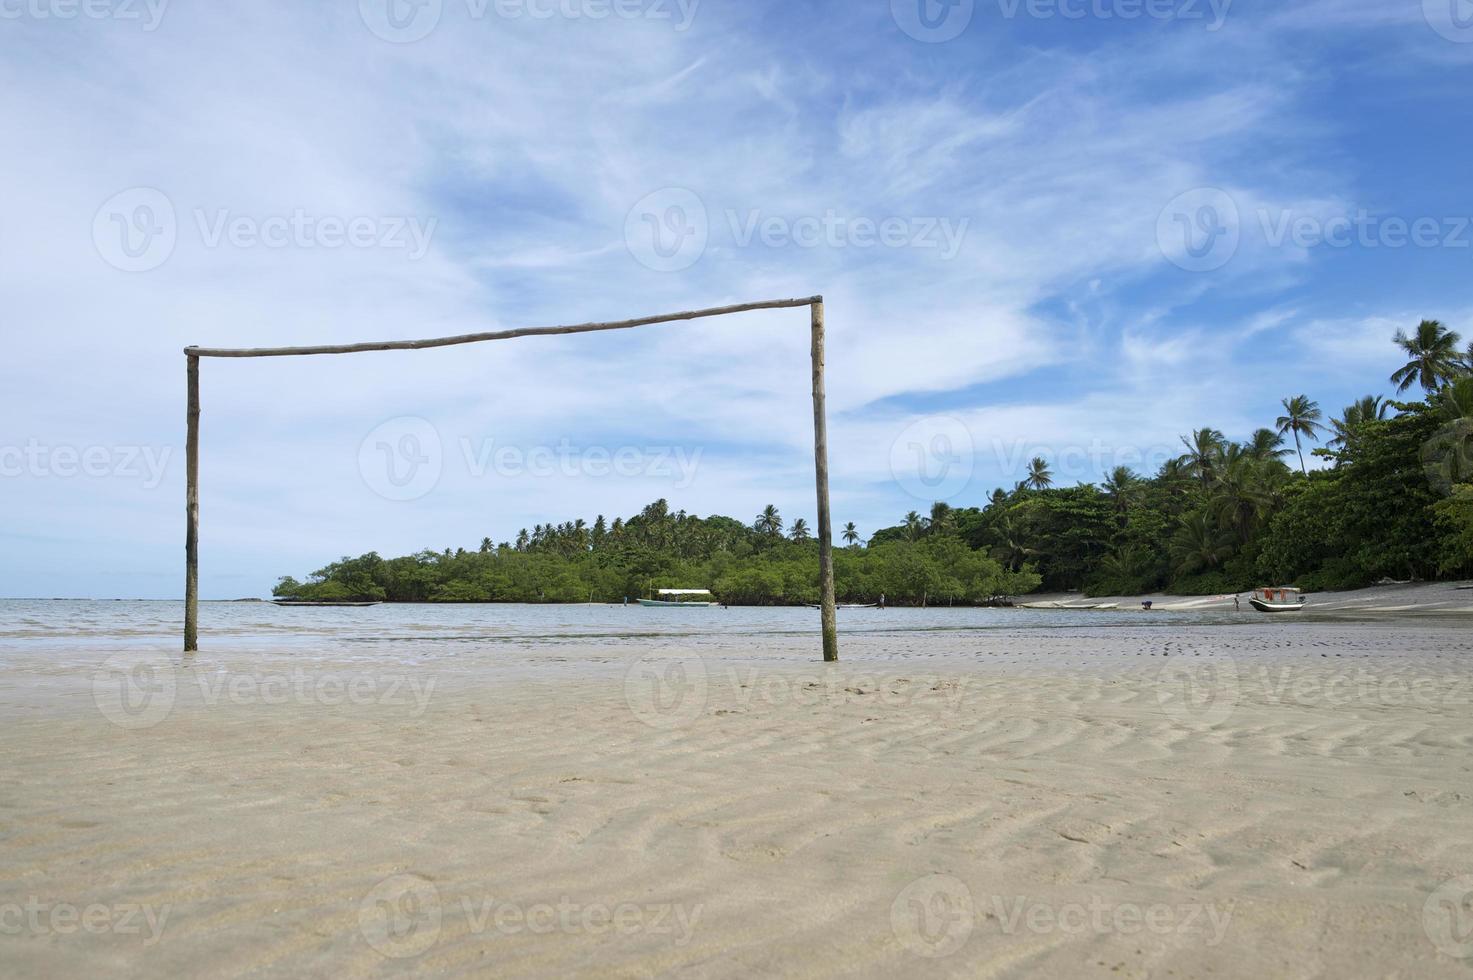 Empty Brazilian Beach Football Pitch with Goal Post photo